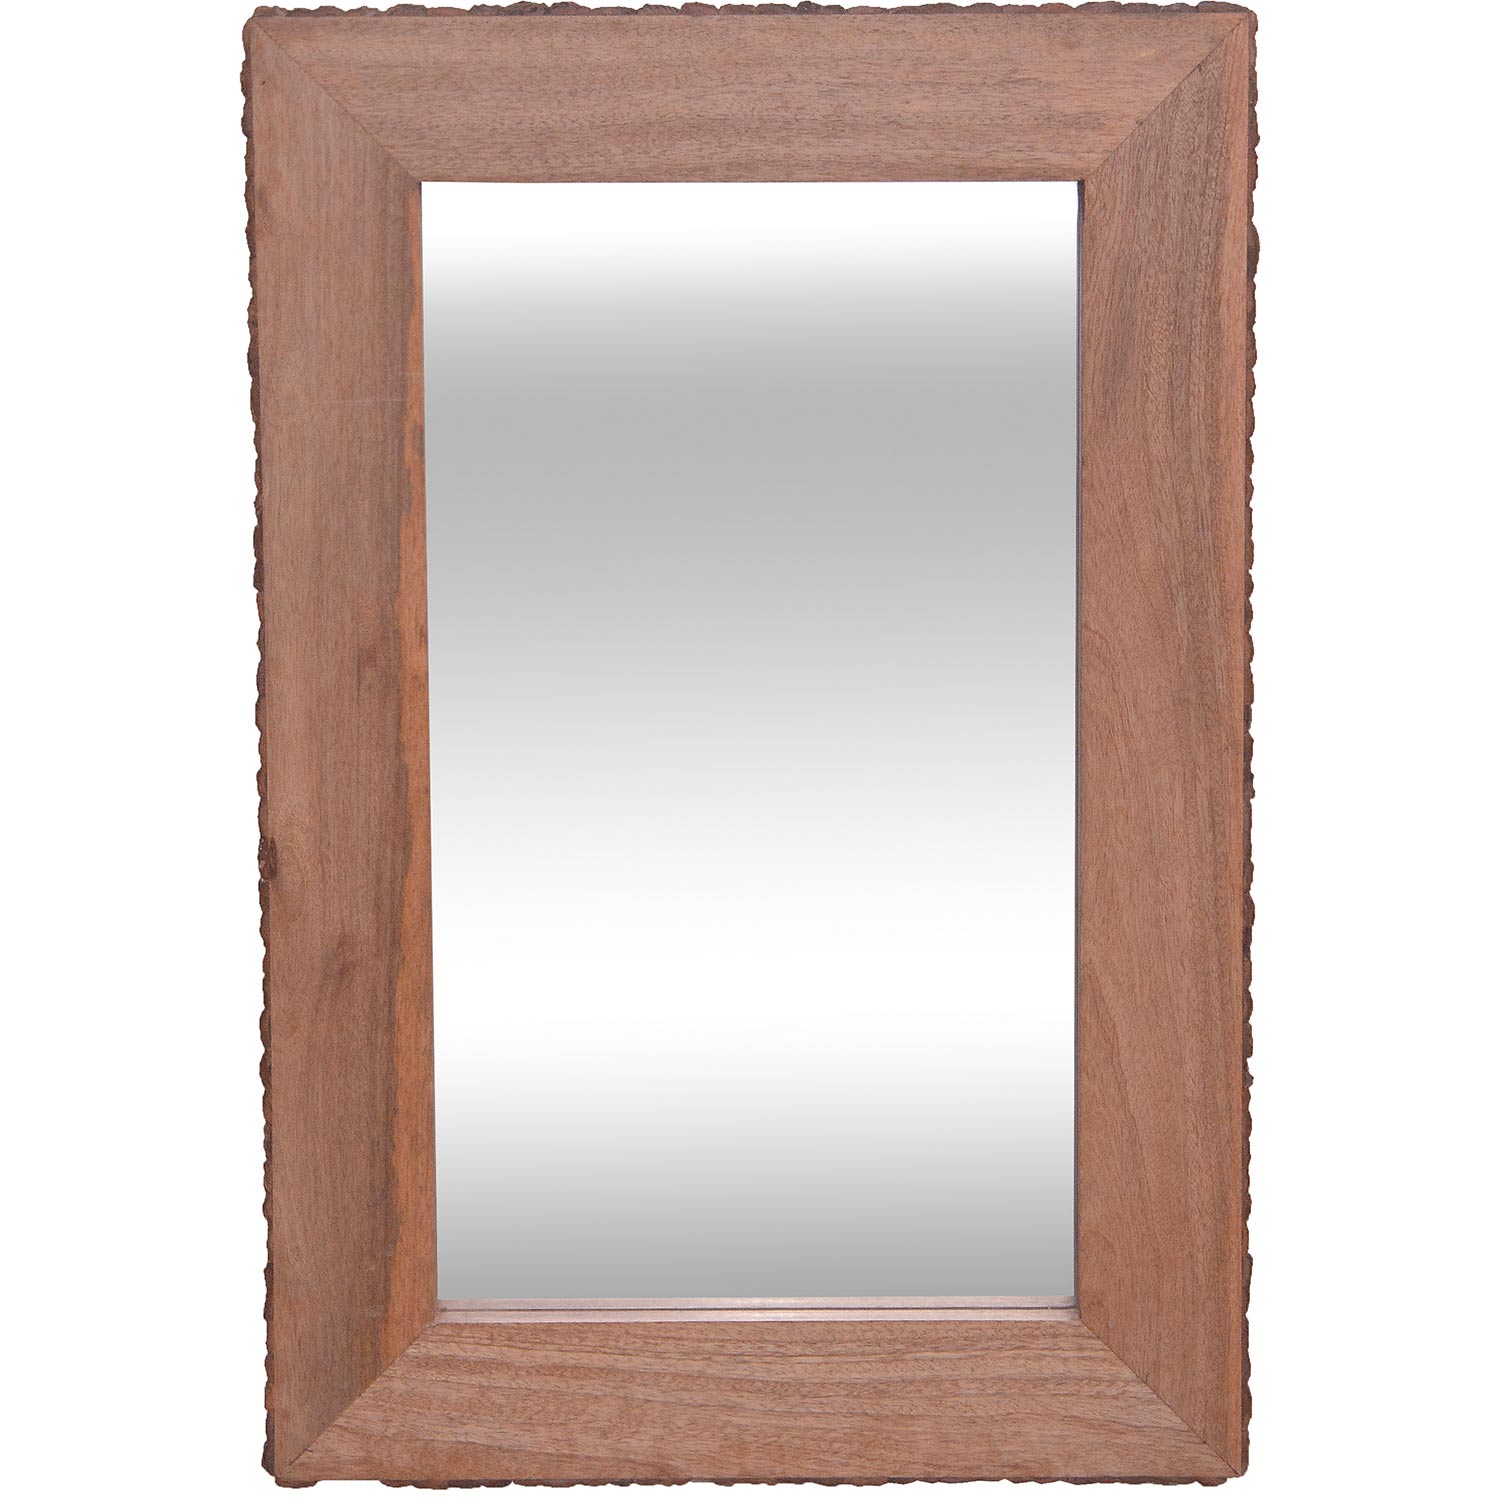 Ren-Wil Wally Rectangle Mirror - Natural